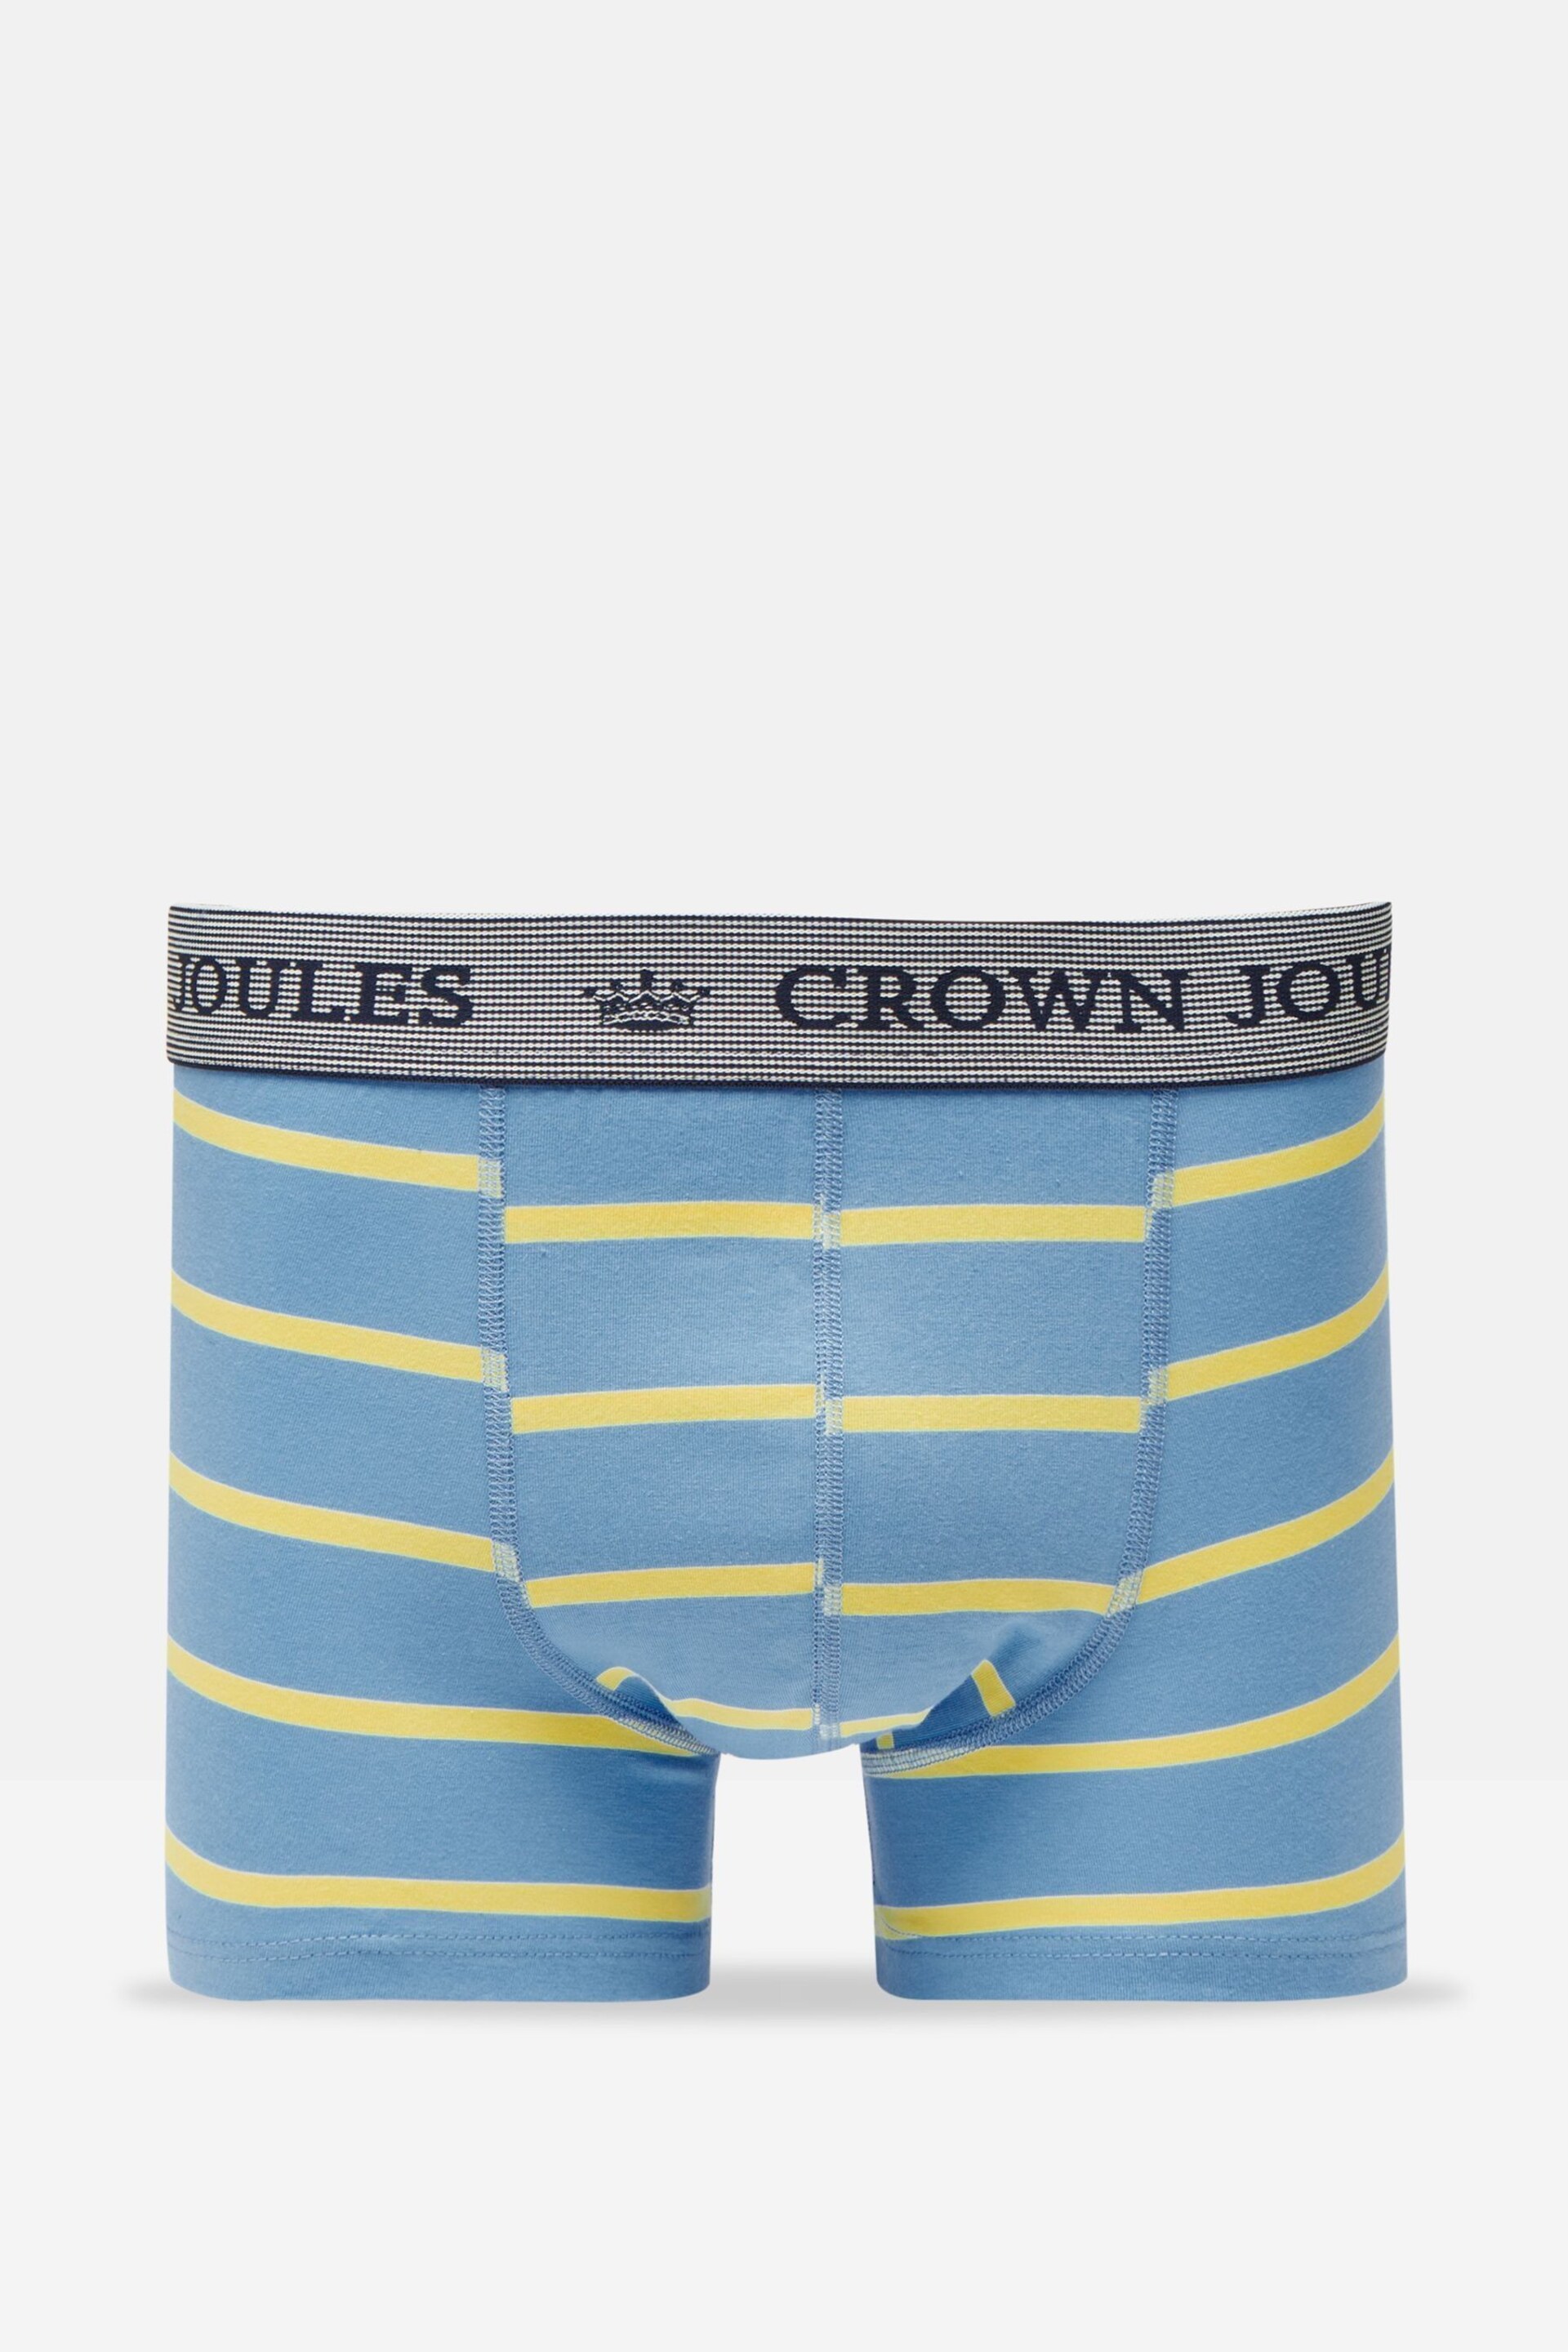 Joules Crown Joules Blue Sail Cotton Boxer Briefs (2 Pack) - Image 3 of 4